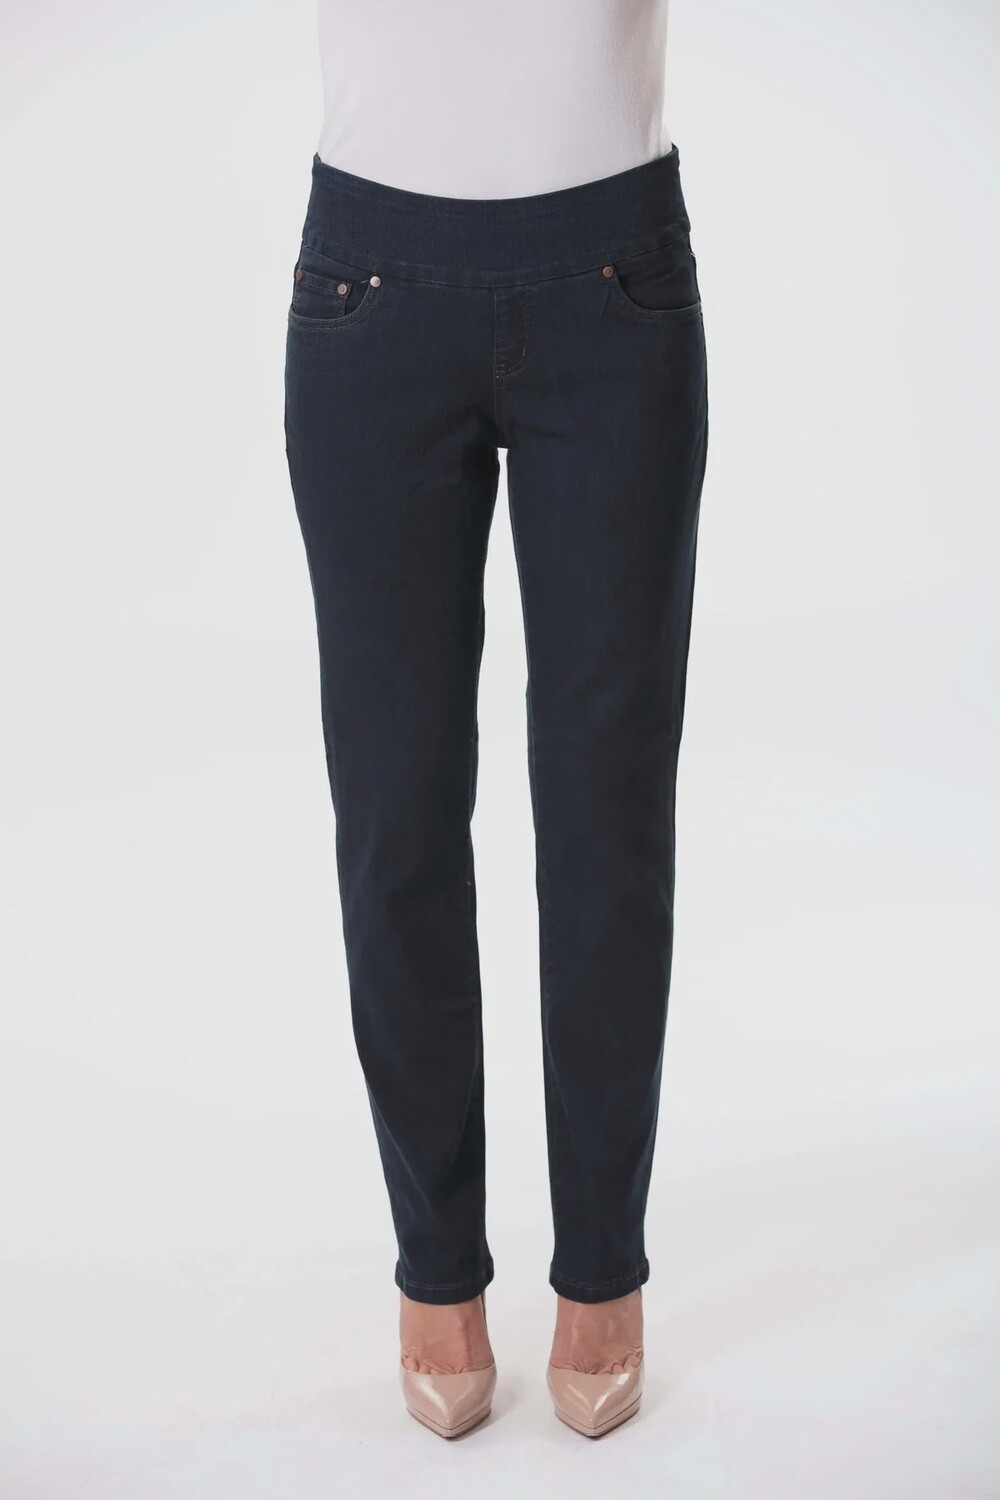 Corfu - Dark Atlantic Super Stretch Jeans - W04B1165, Size: 8